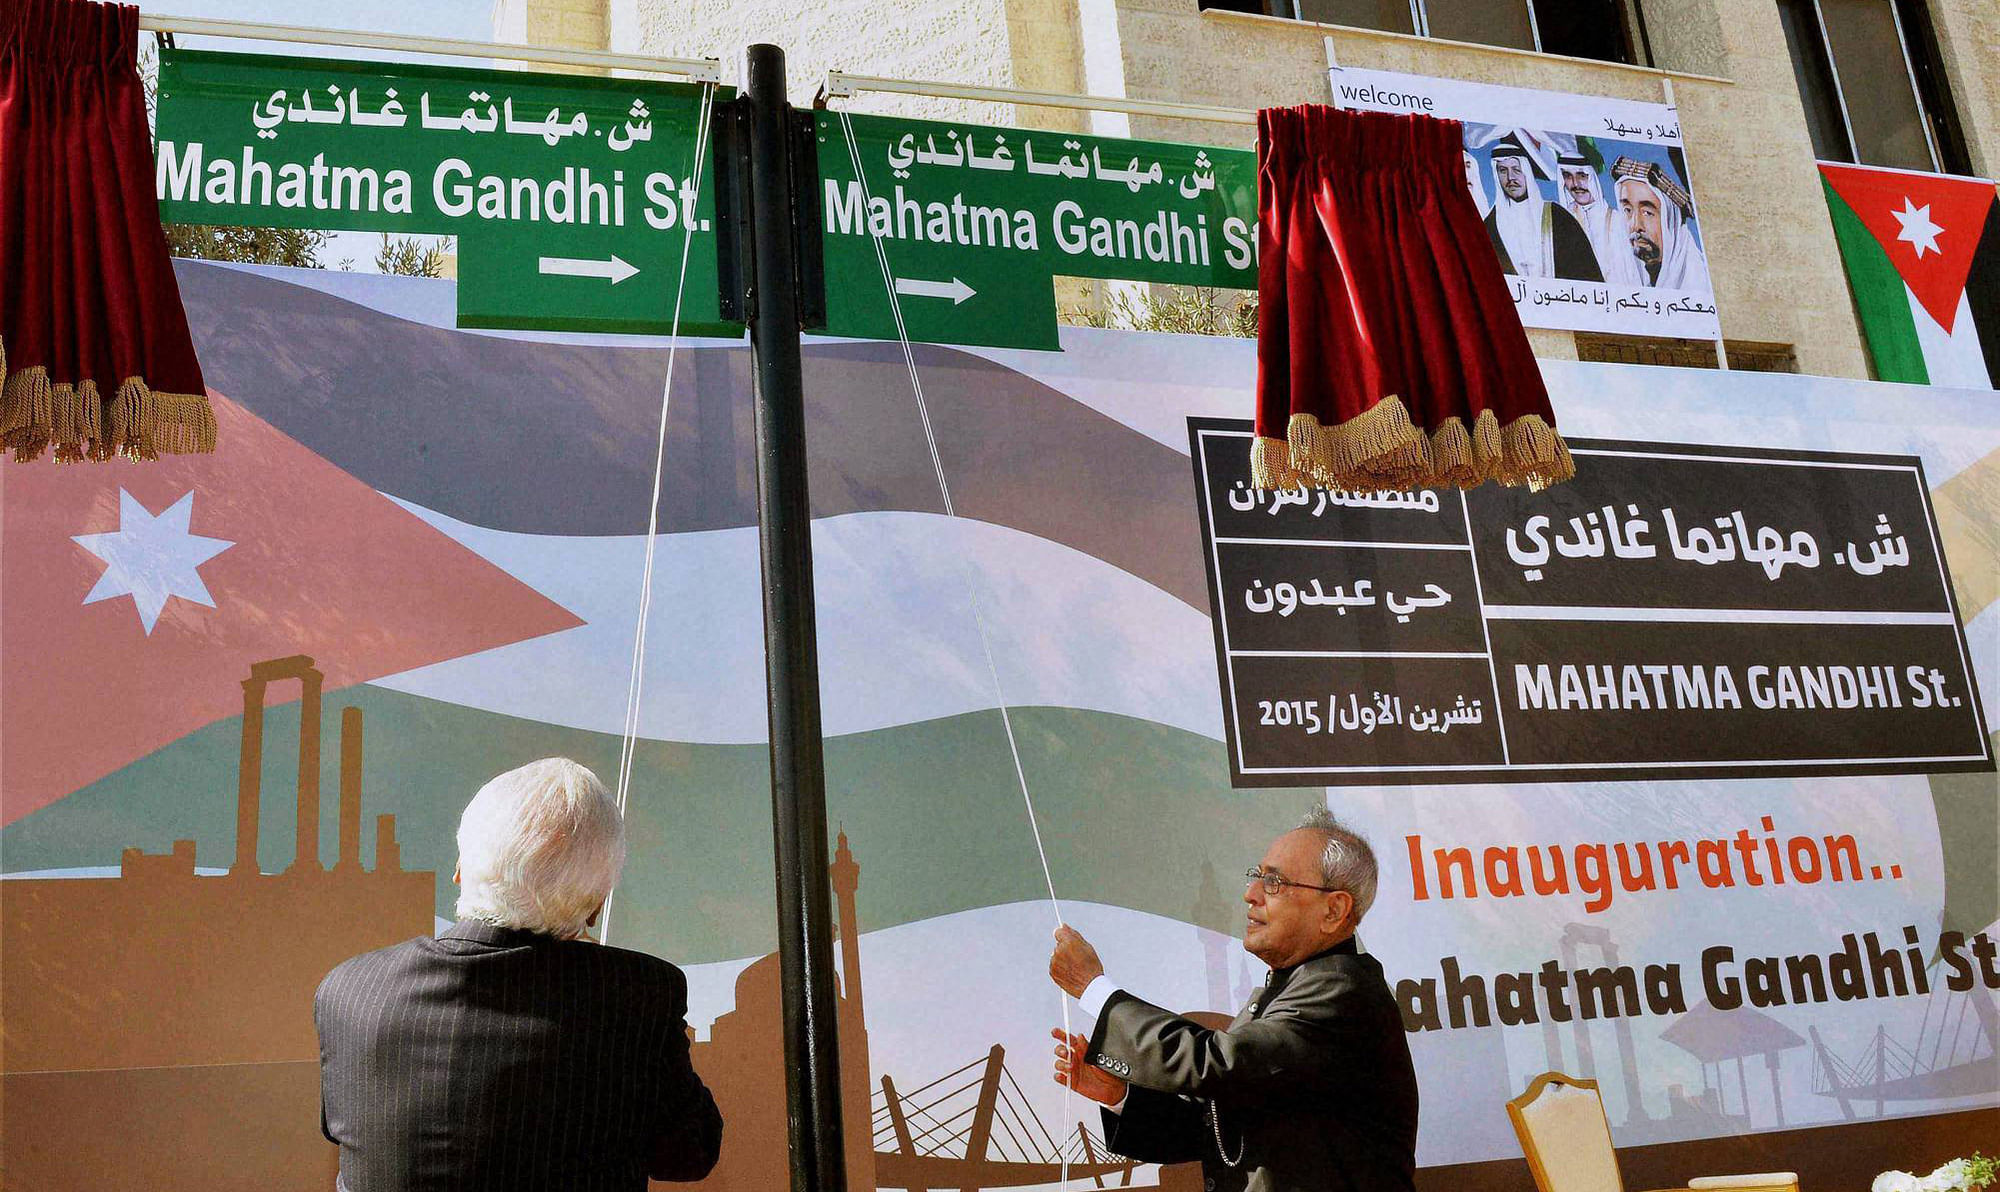 President of India, Pranab Mukherjee during inauguration of Mahatma Gandhi Street at Amman in Jordan, 12 October 2015. (Photo: PTI)